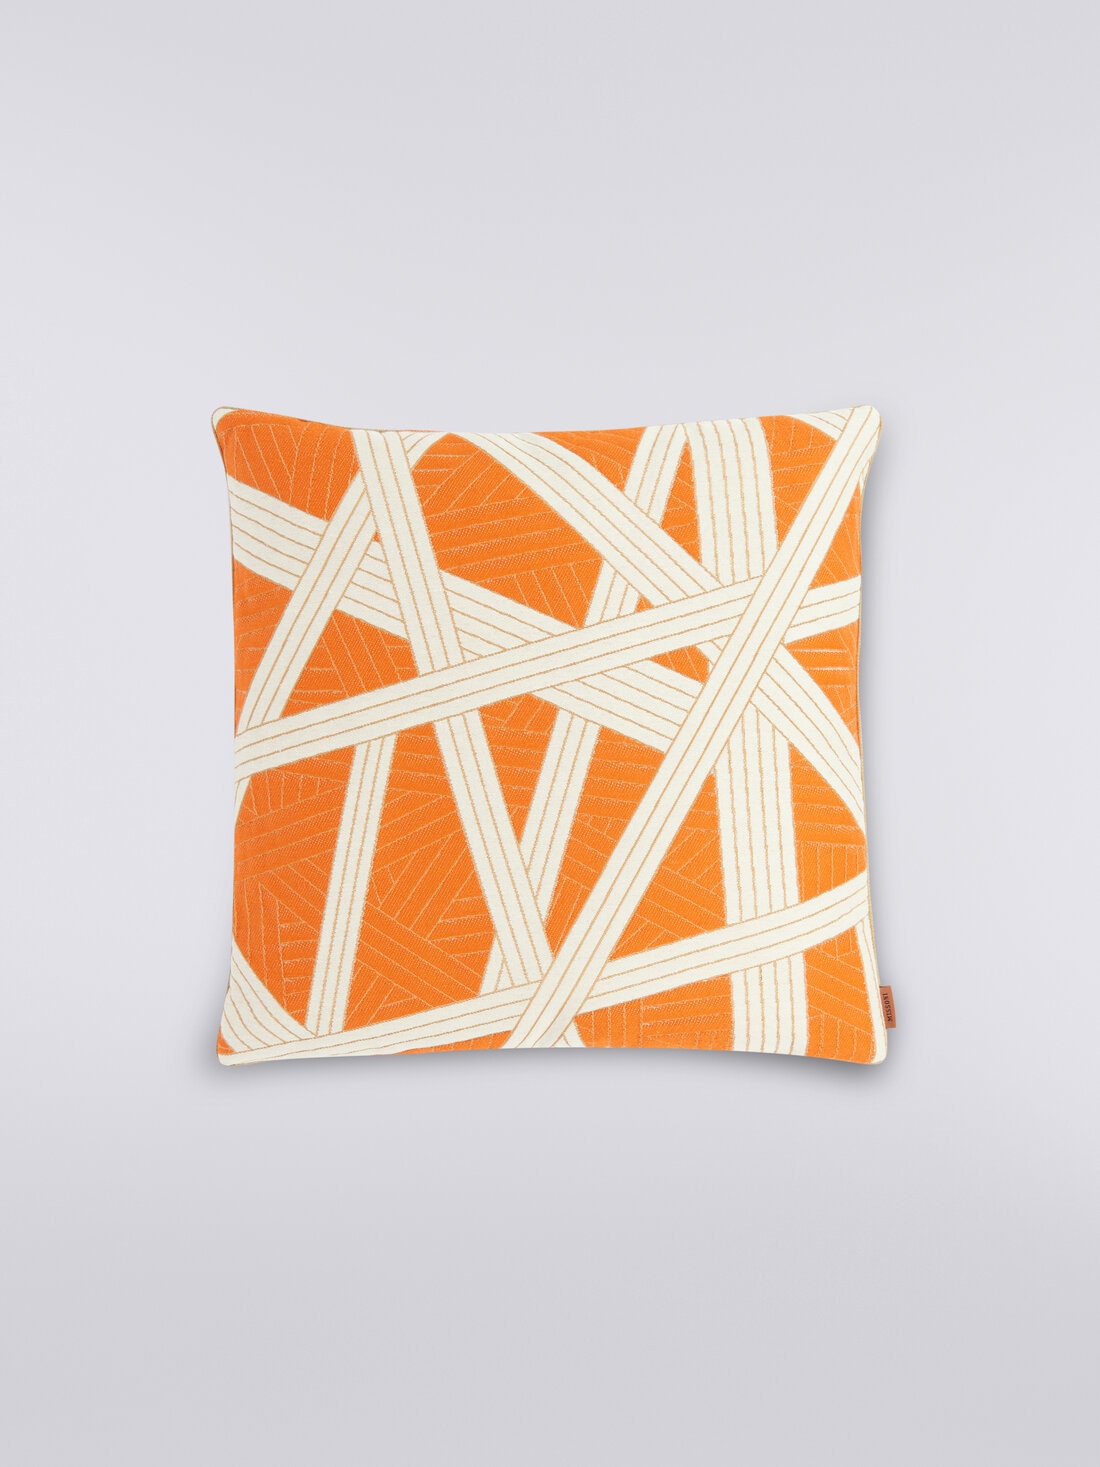 Nastri cushion 40x40 cm with stitching, Orange - 8051575830525 - 0